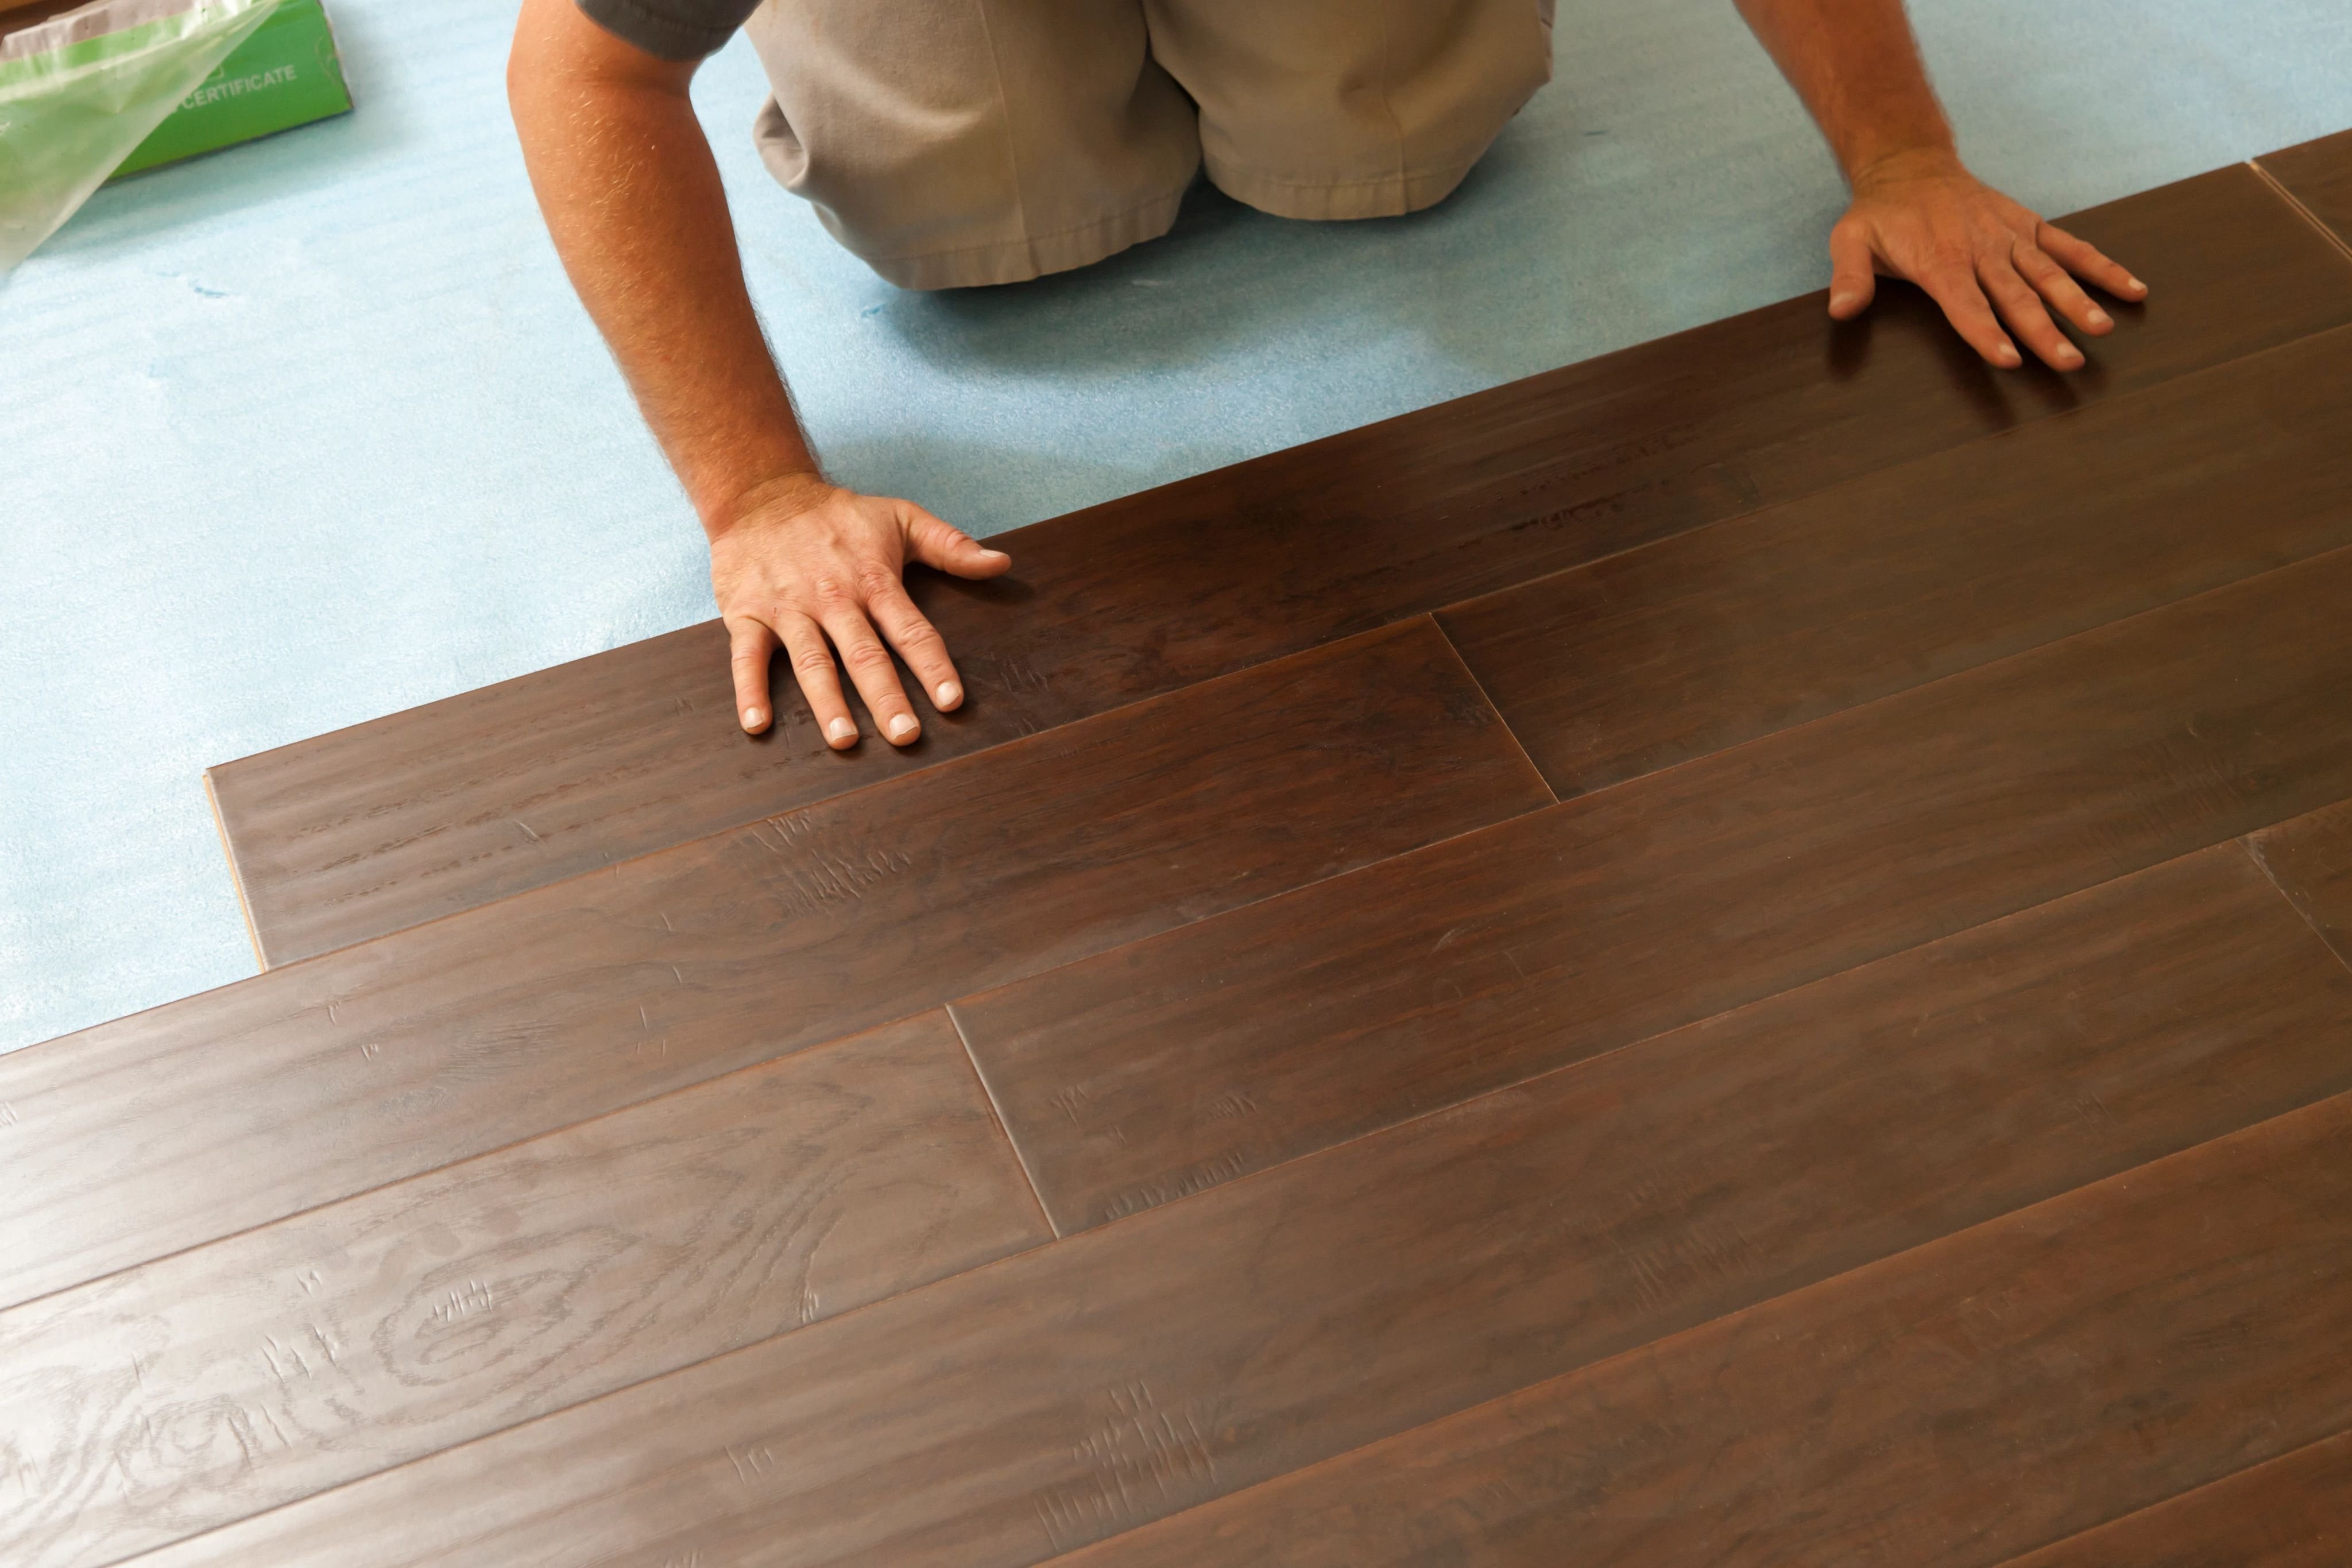 Person installing flooring - Professional flooring installation from Carpet & Flooring By Denny Lee in Abingdon, MD